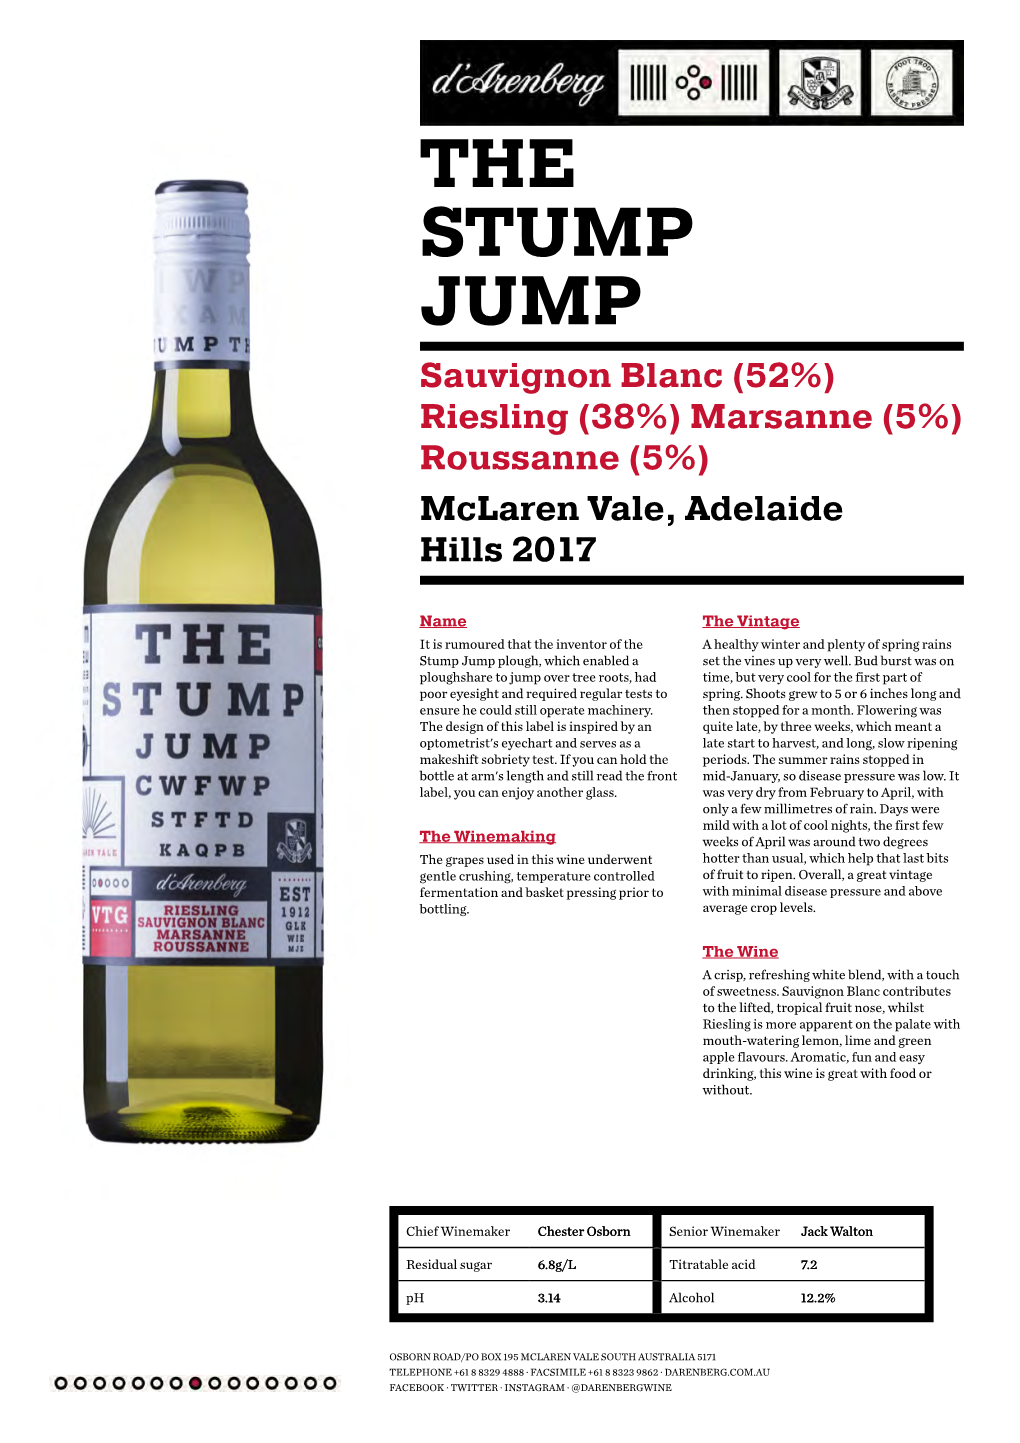 THE STUMP JUMP Sauvignon Blanc (52%) Riesling (38%) Marsanne (5%) Roussanne (5%) Mclaren Vale, Adelaide Hills 2017